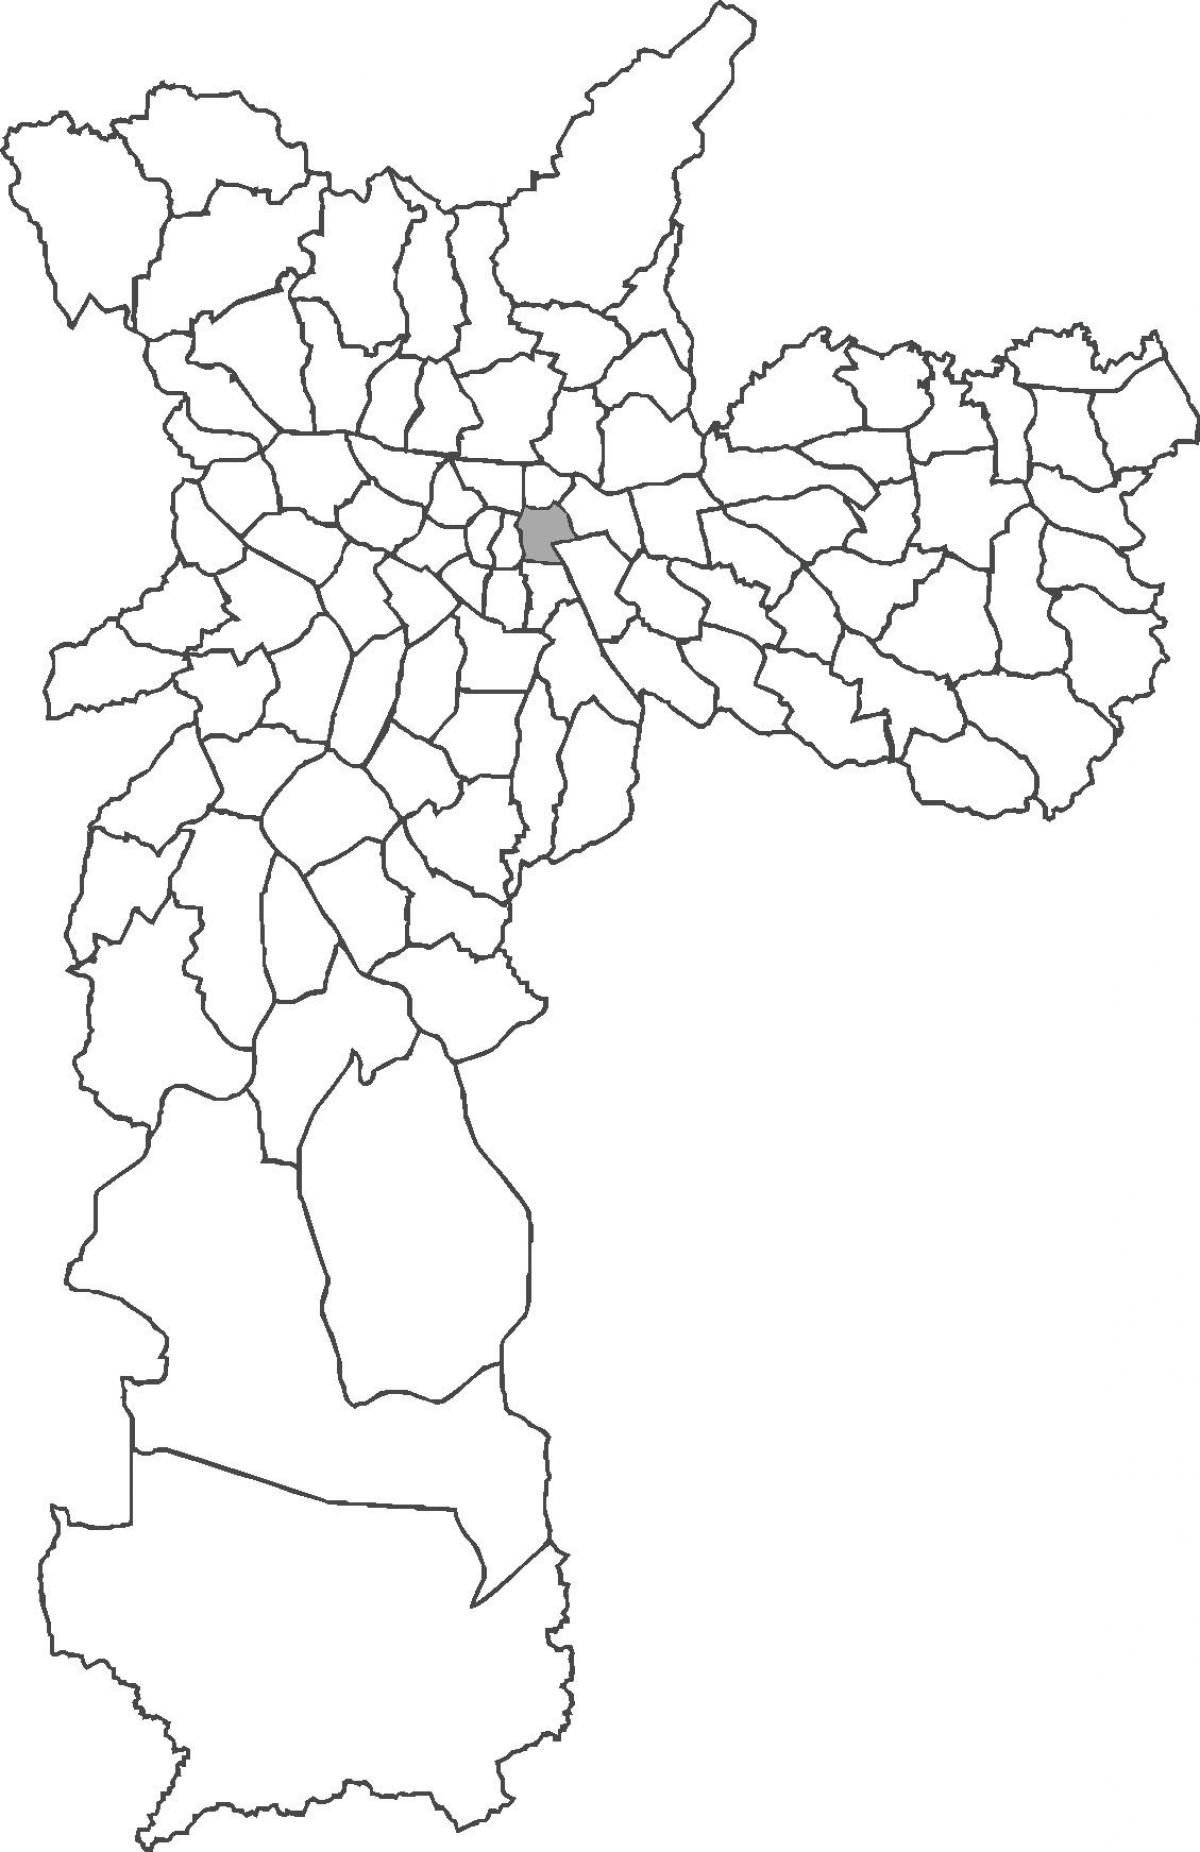 Карта на района Bras